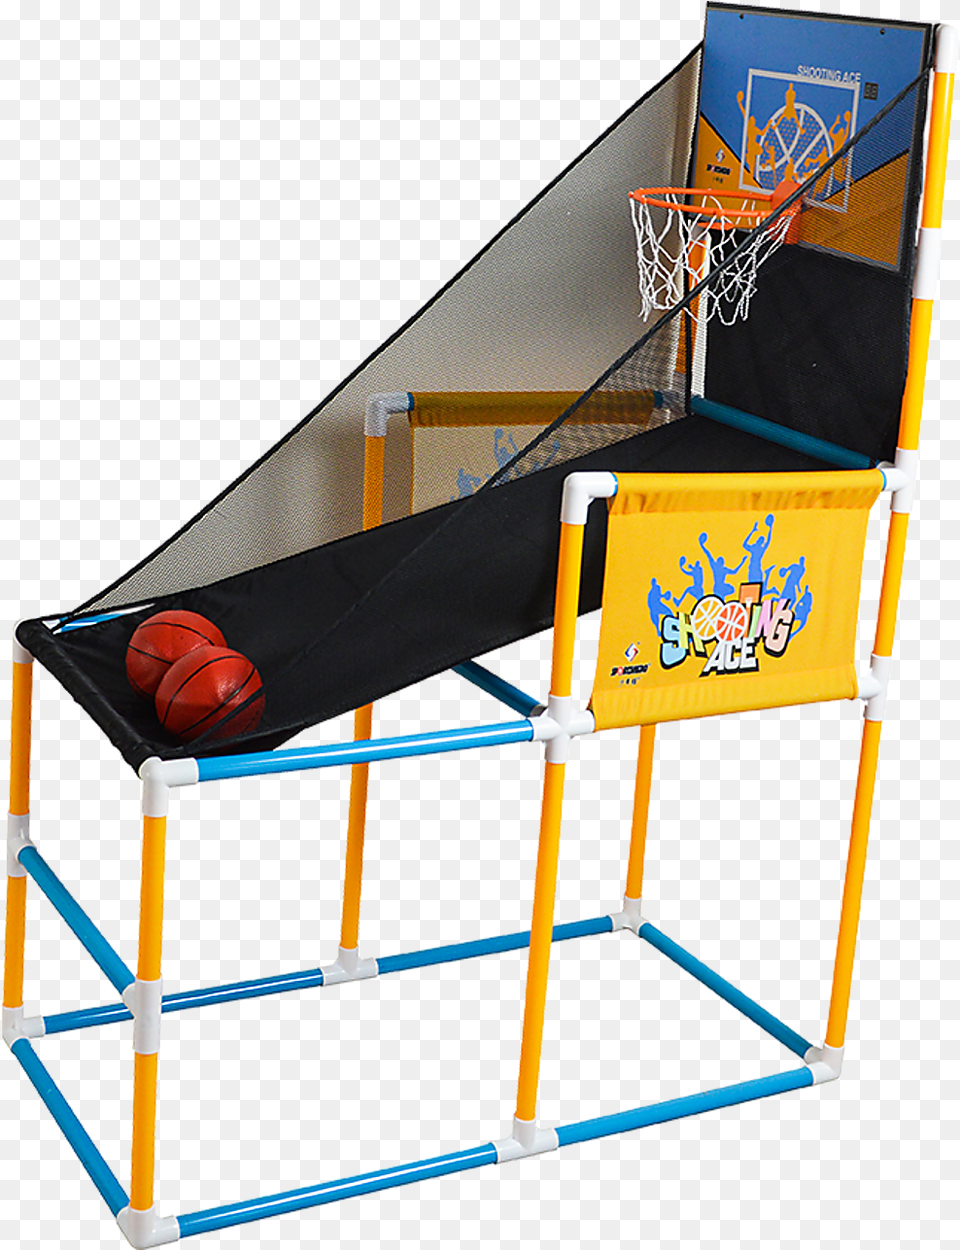 Kids Basketball Hoop Arcade Game Games U0026 Hobbies U003e Games For Basketball, Play Area, Ball, Basketball (ball), Sport Png